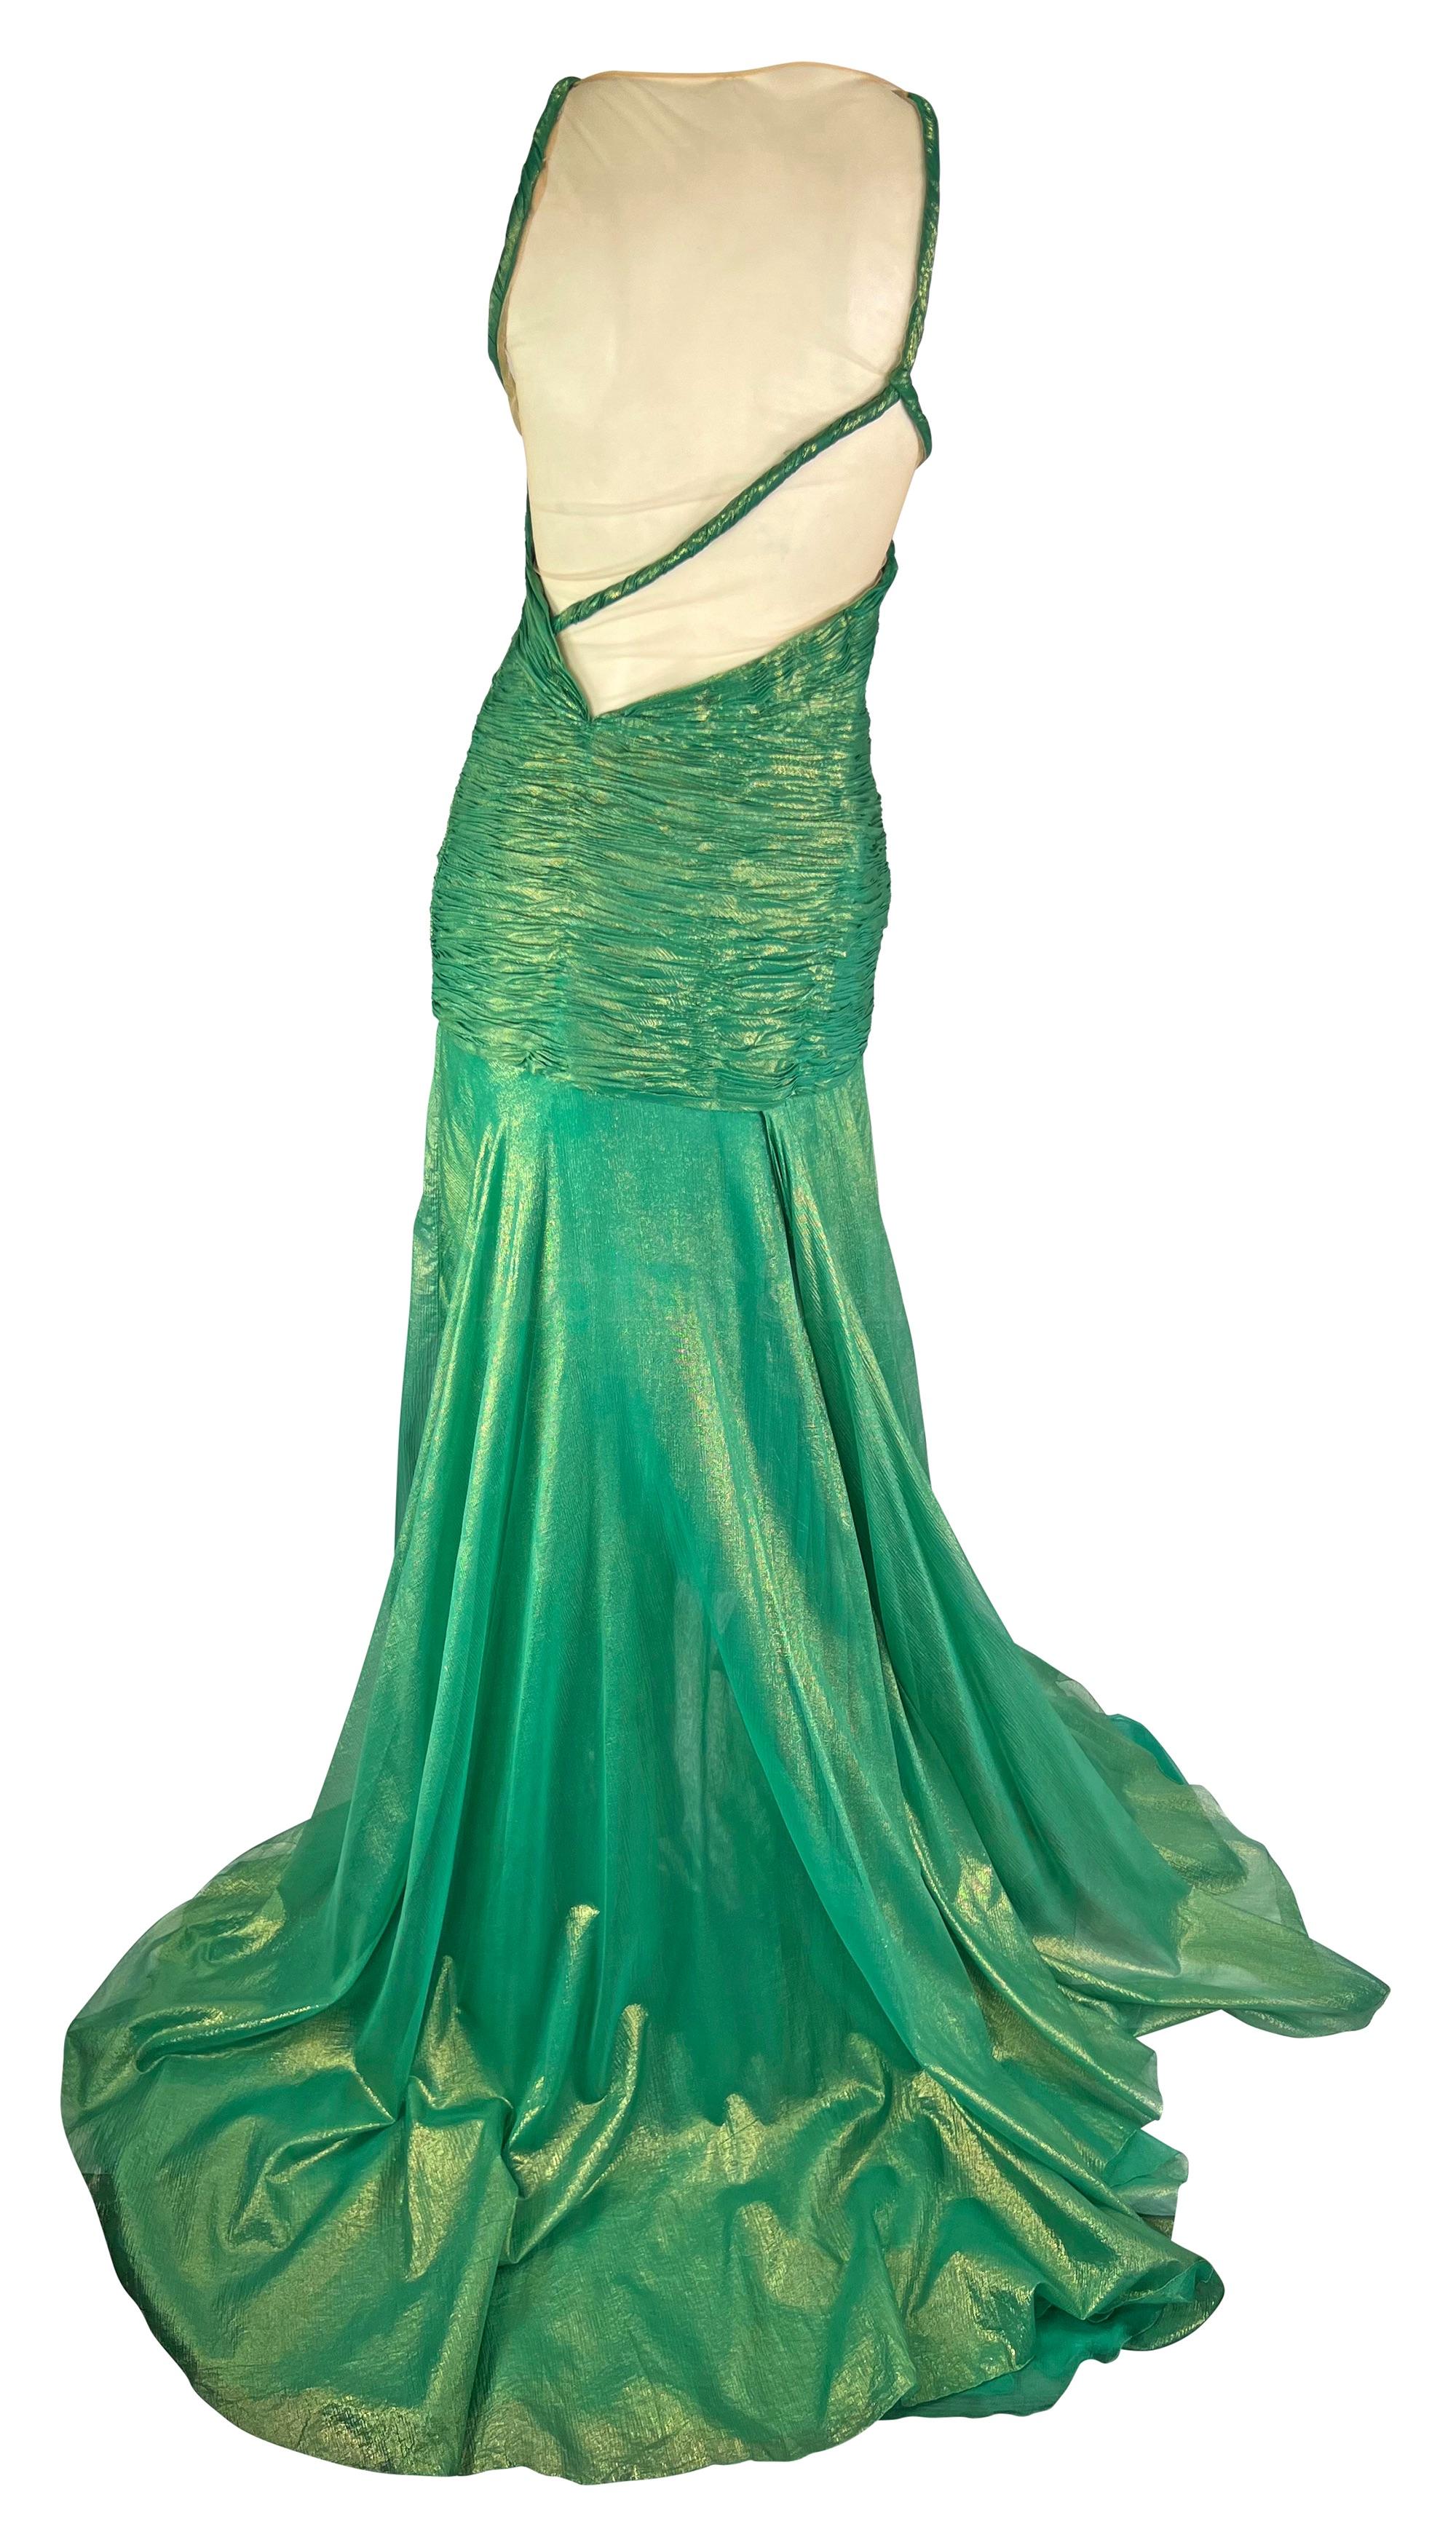 S/S 2004 Atelier Versace by Donatella Metallic Green Halterneck Runway Gown  For Sale 4